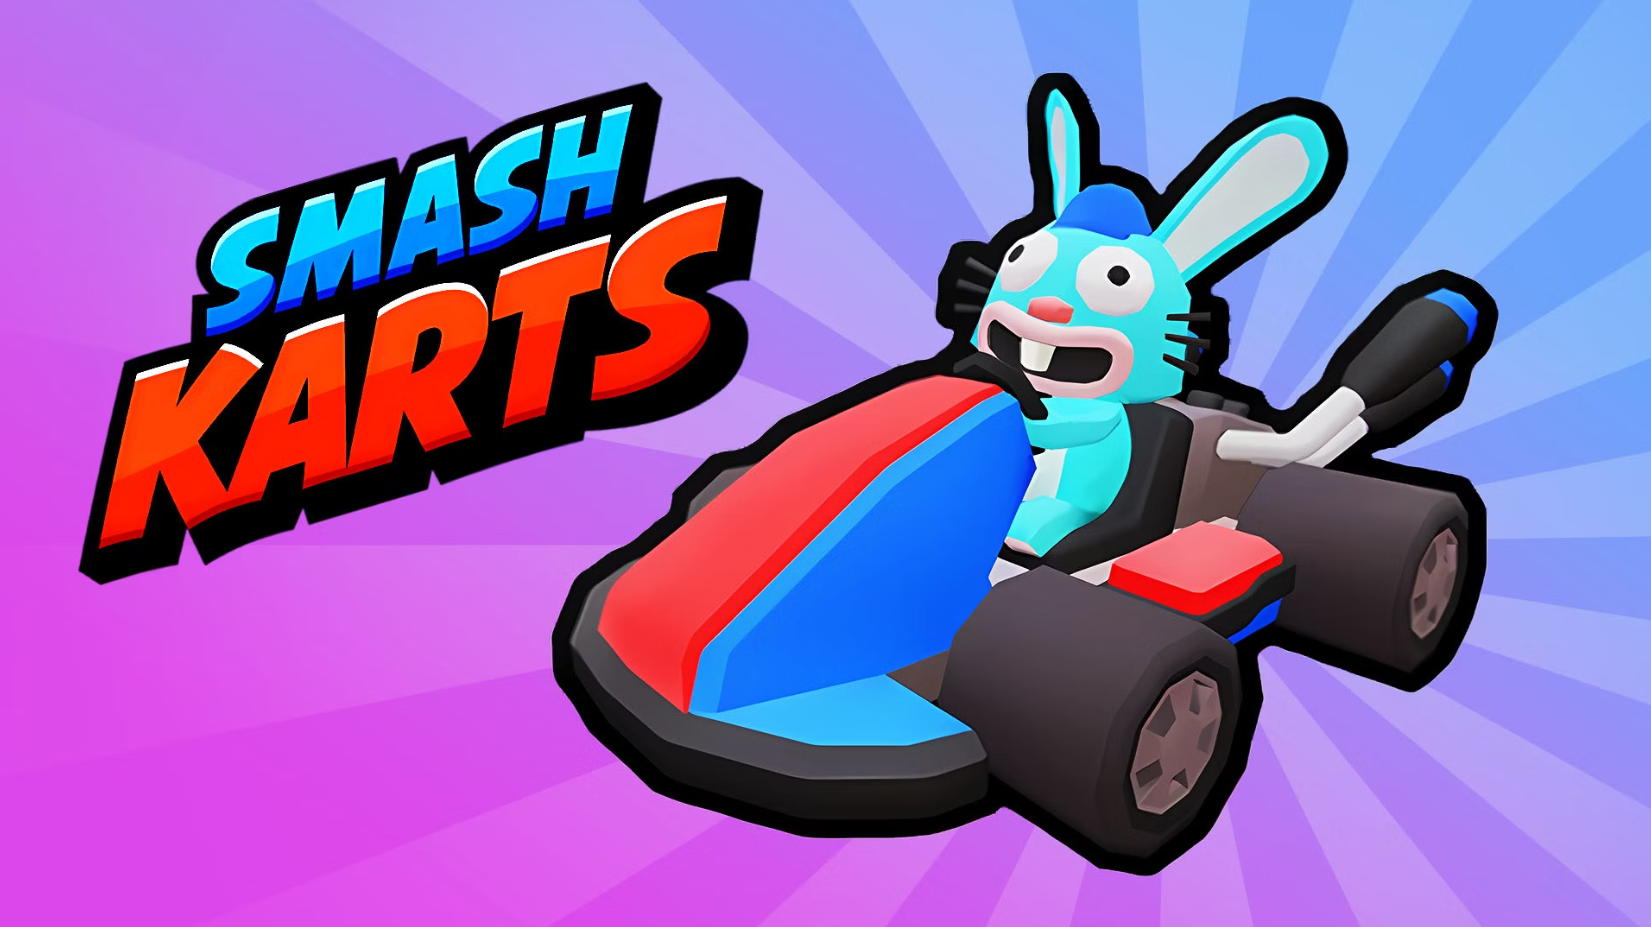 Playing Smash Karts' on poki.com 